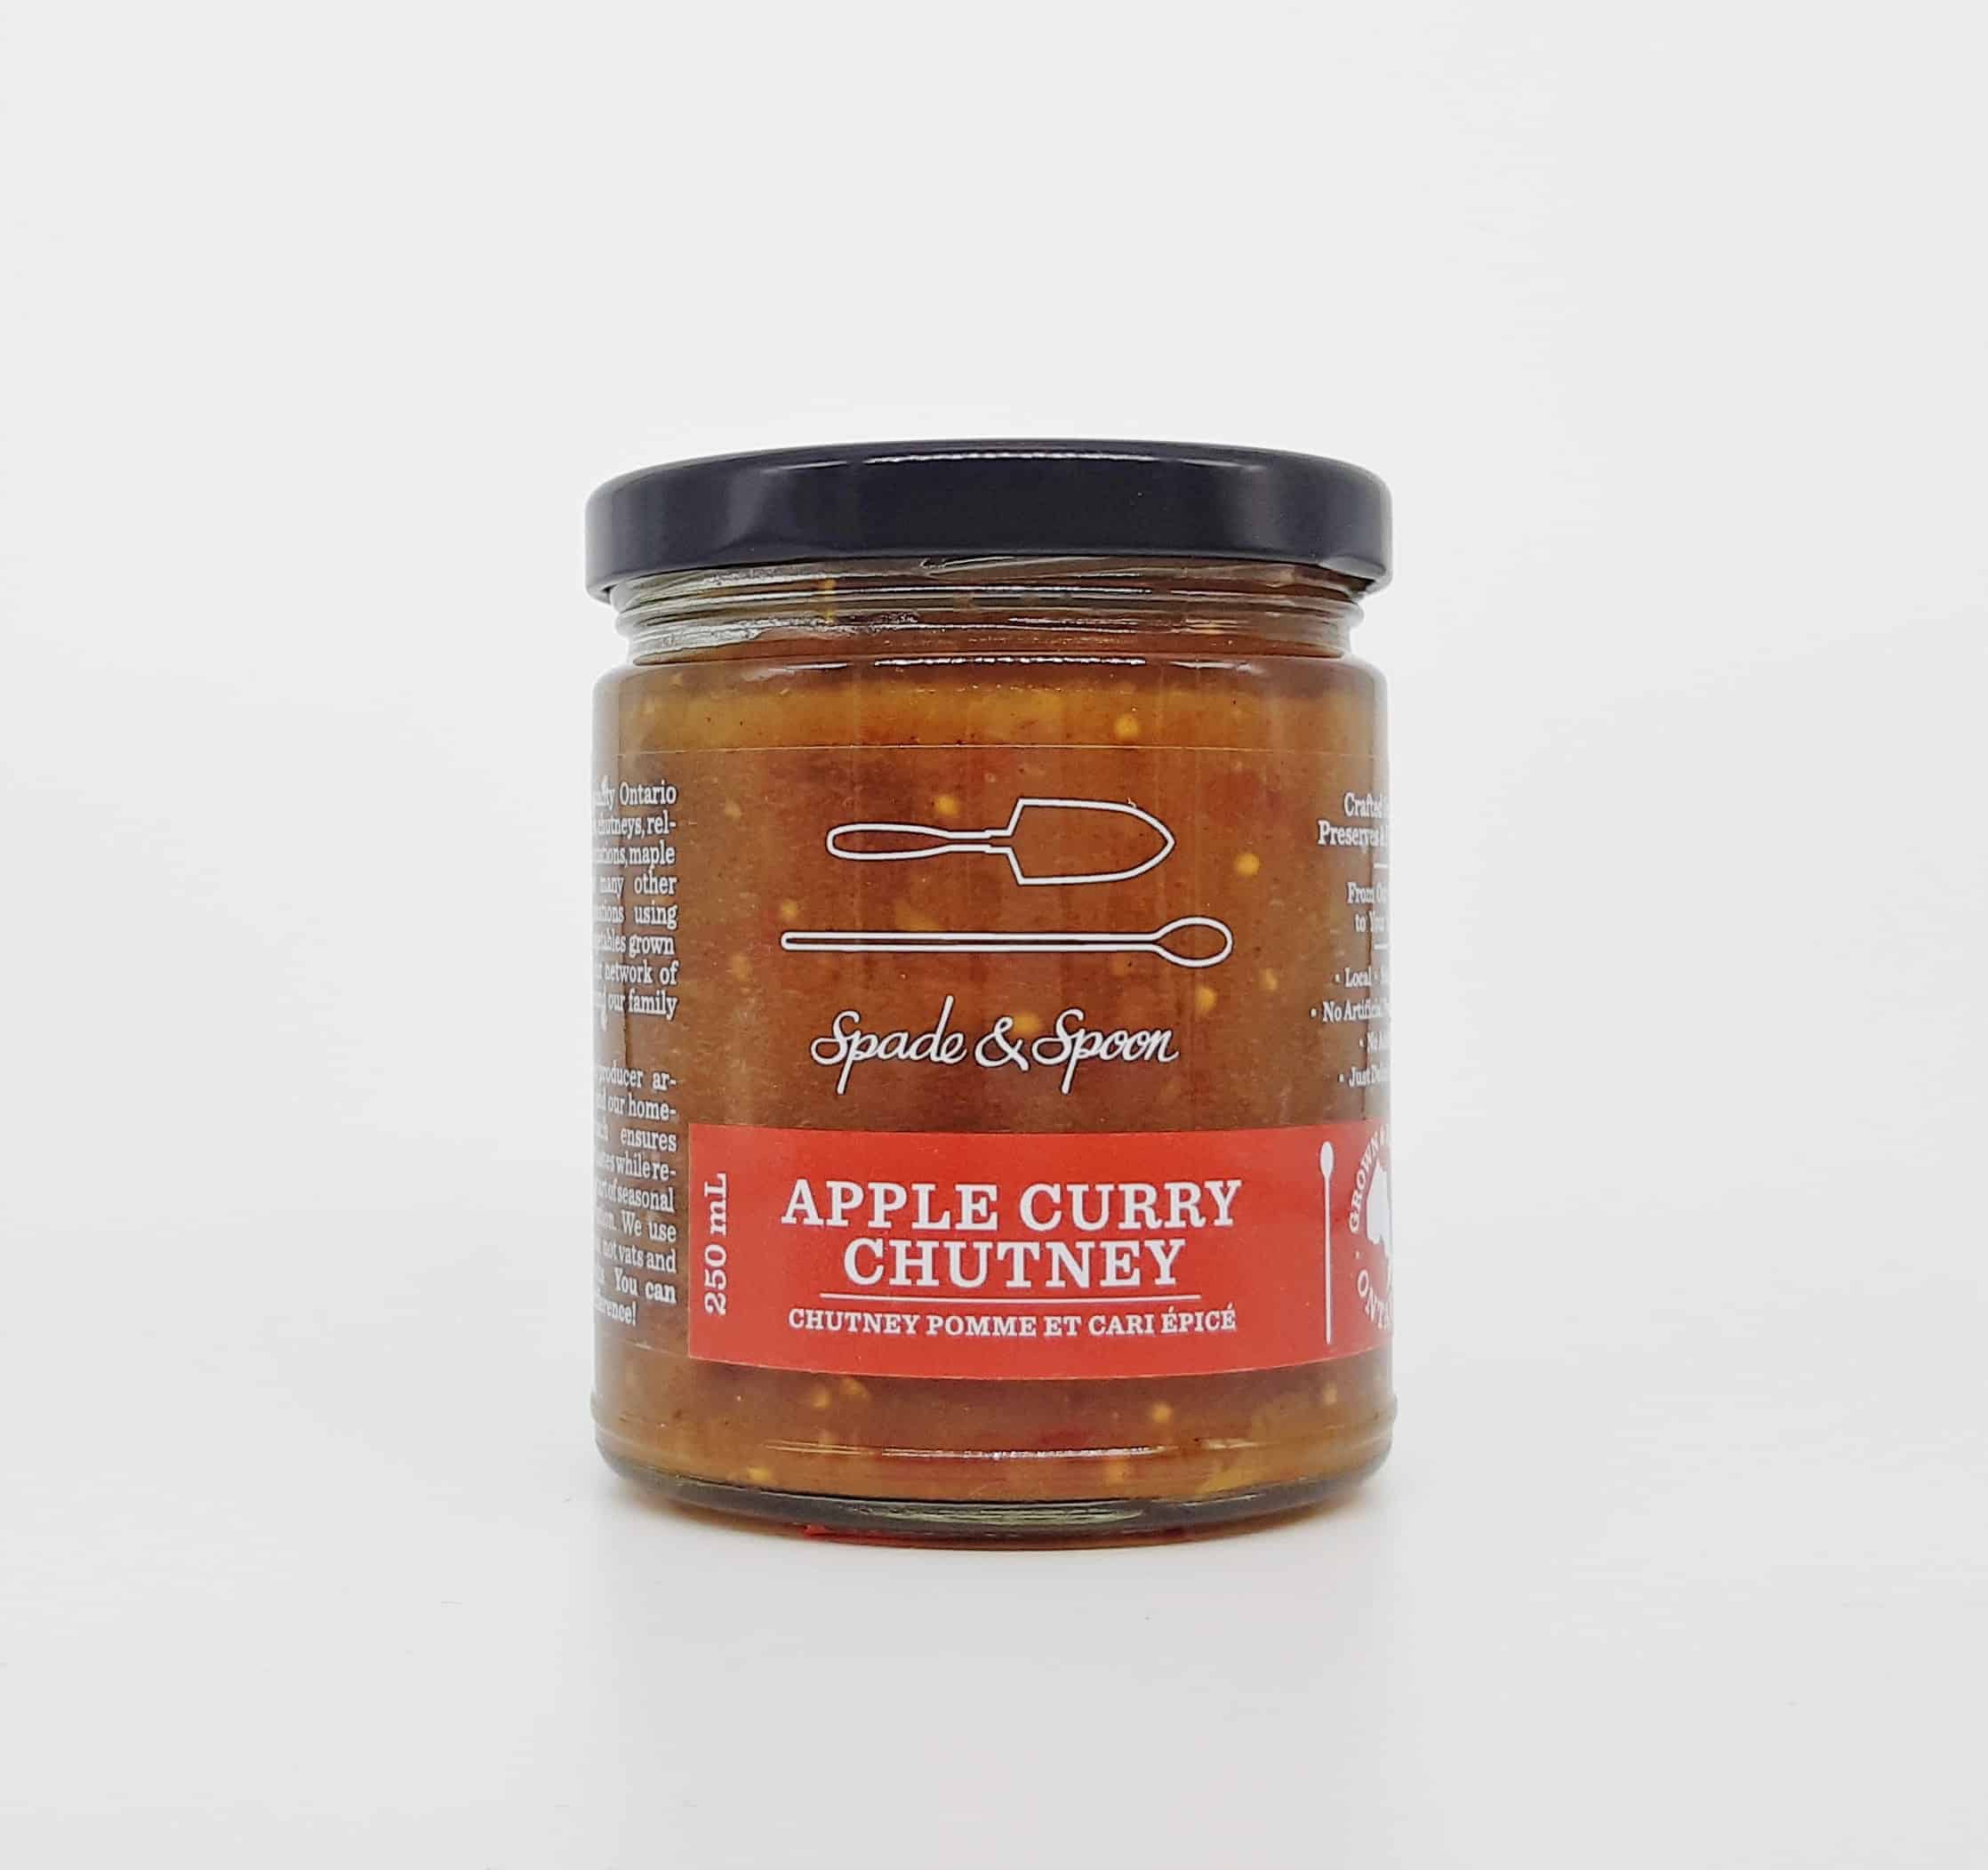 Apple curry chutney